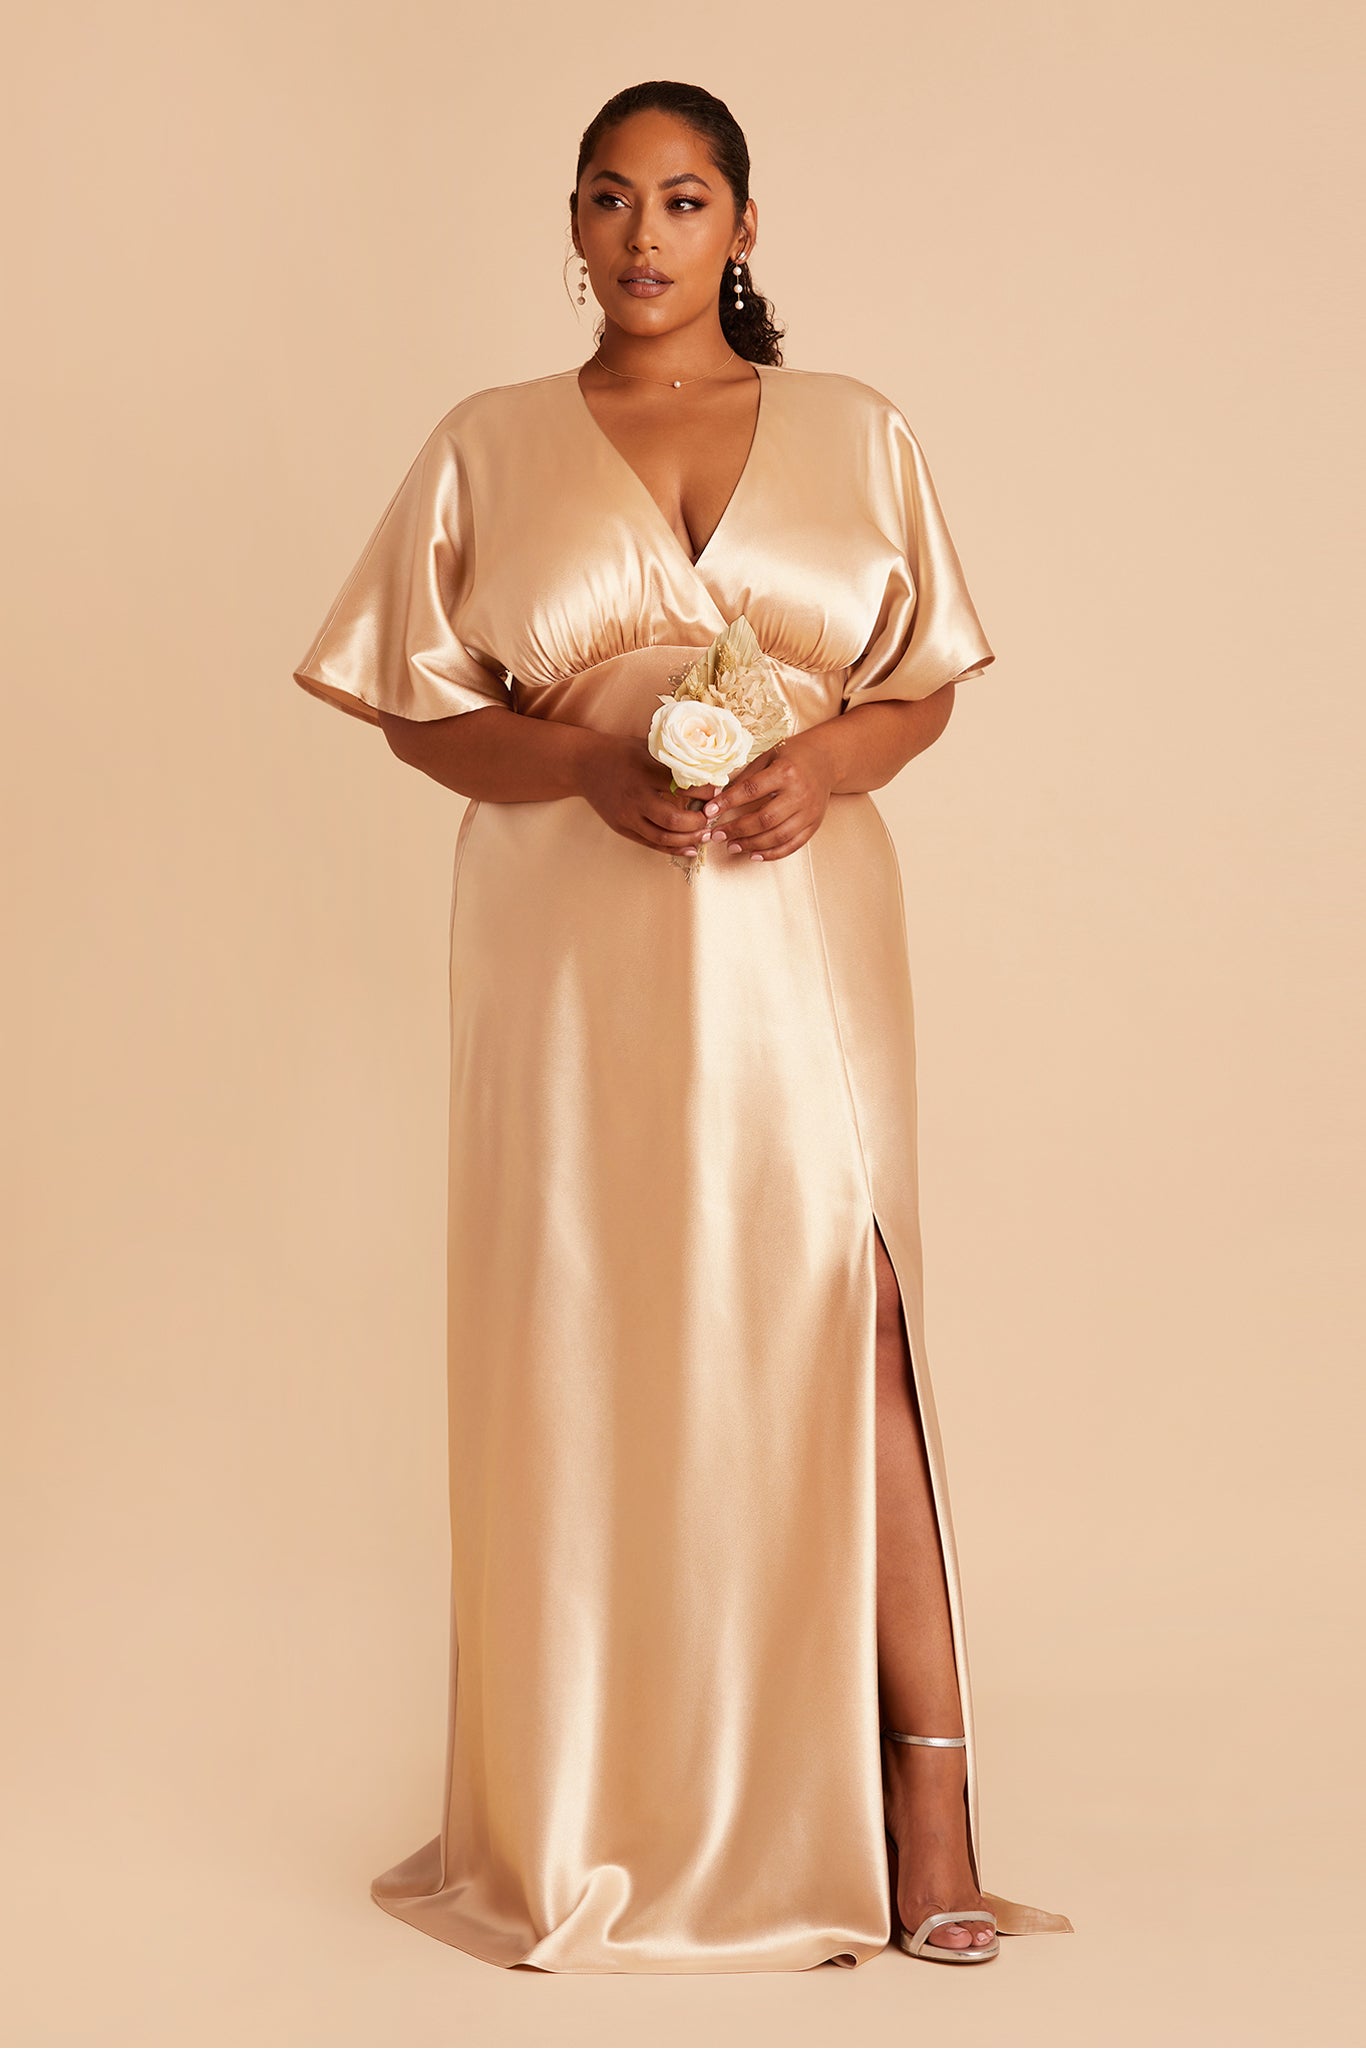 Jesse Satin Dress Curve dress in gold satin by Birdy Grey, front view